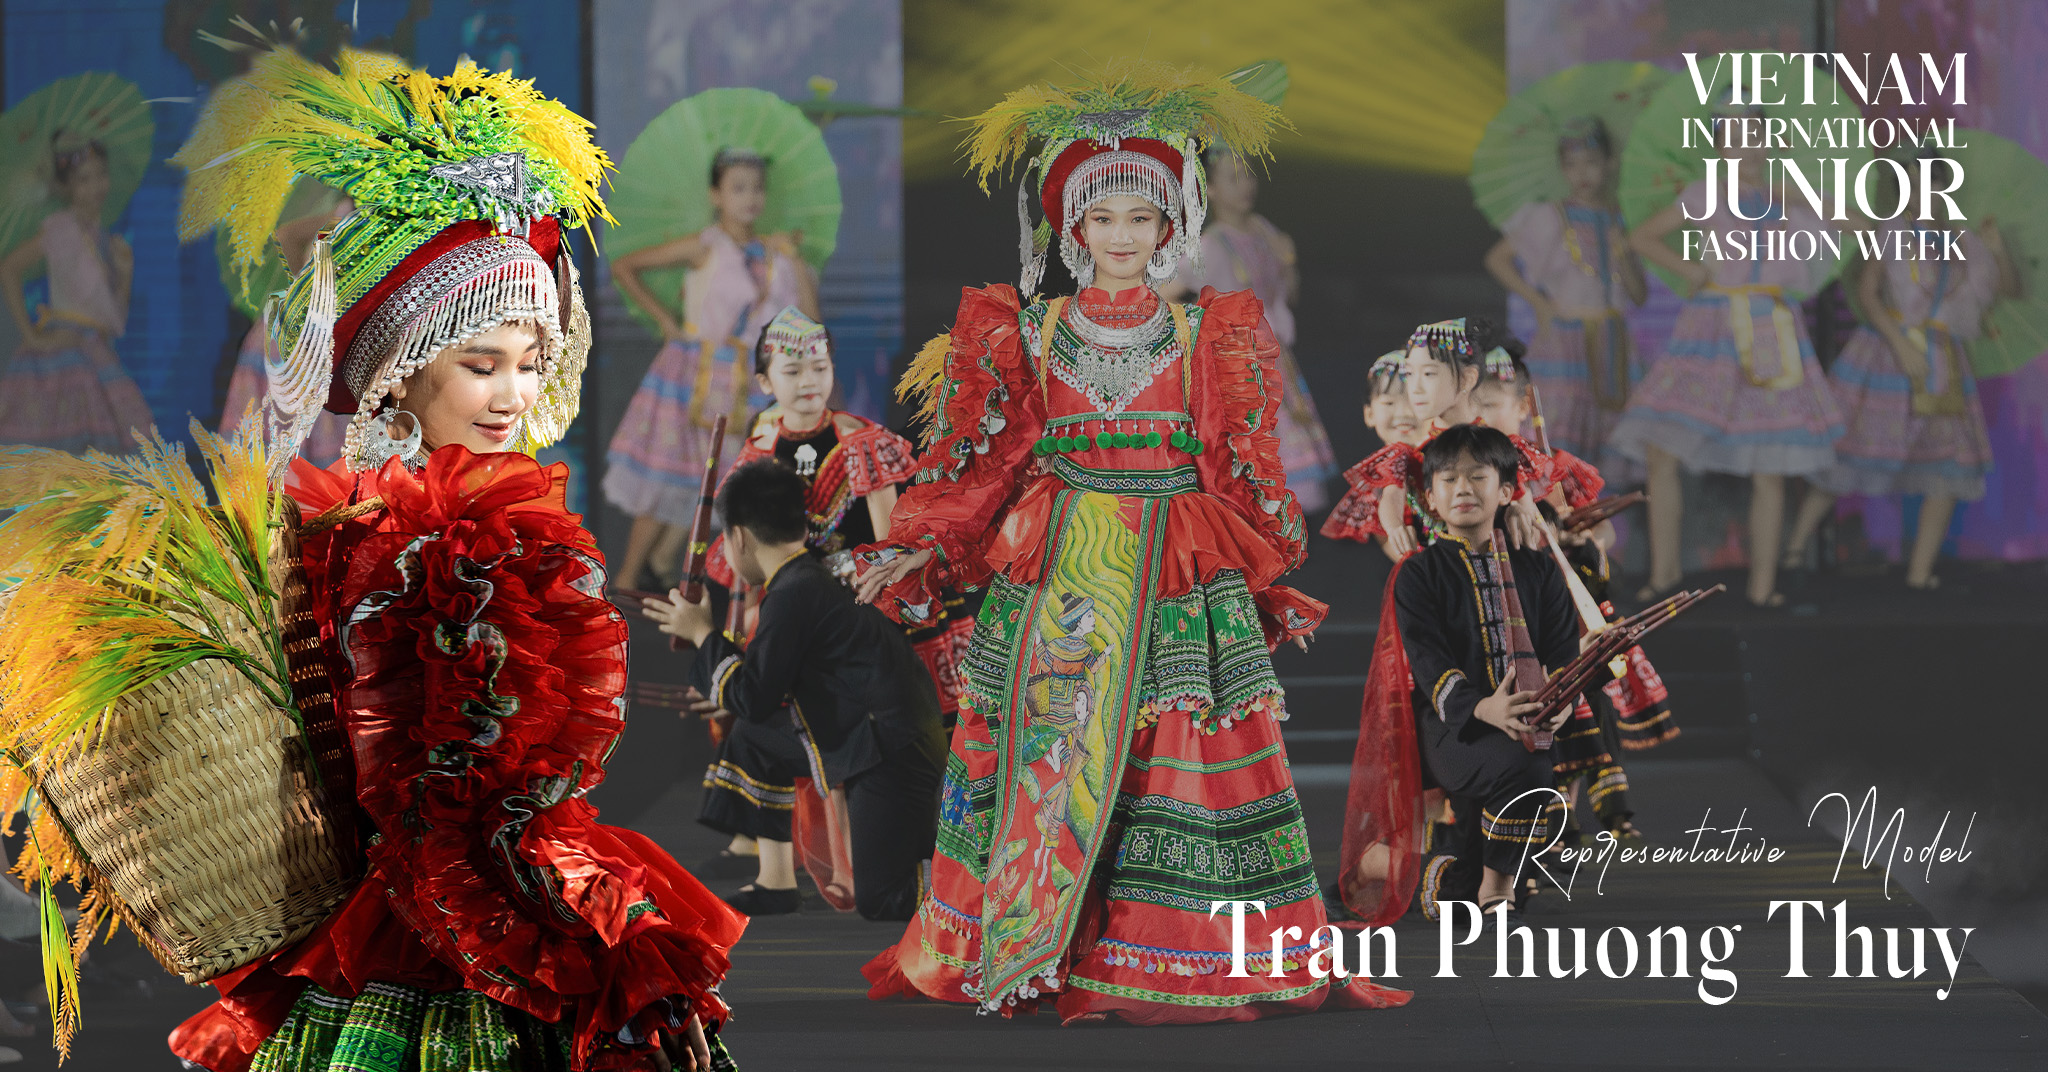 Tran Phuong Thuy shines as the representative image at the opening night of Vietnam International Junior Fashion Week 2023.